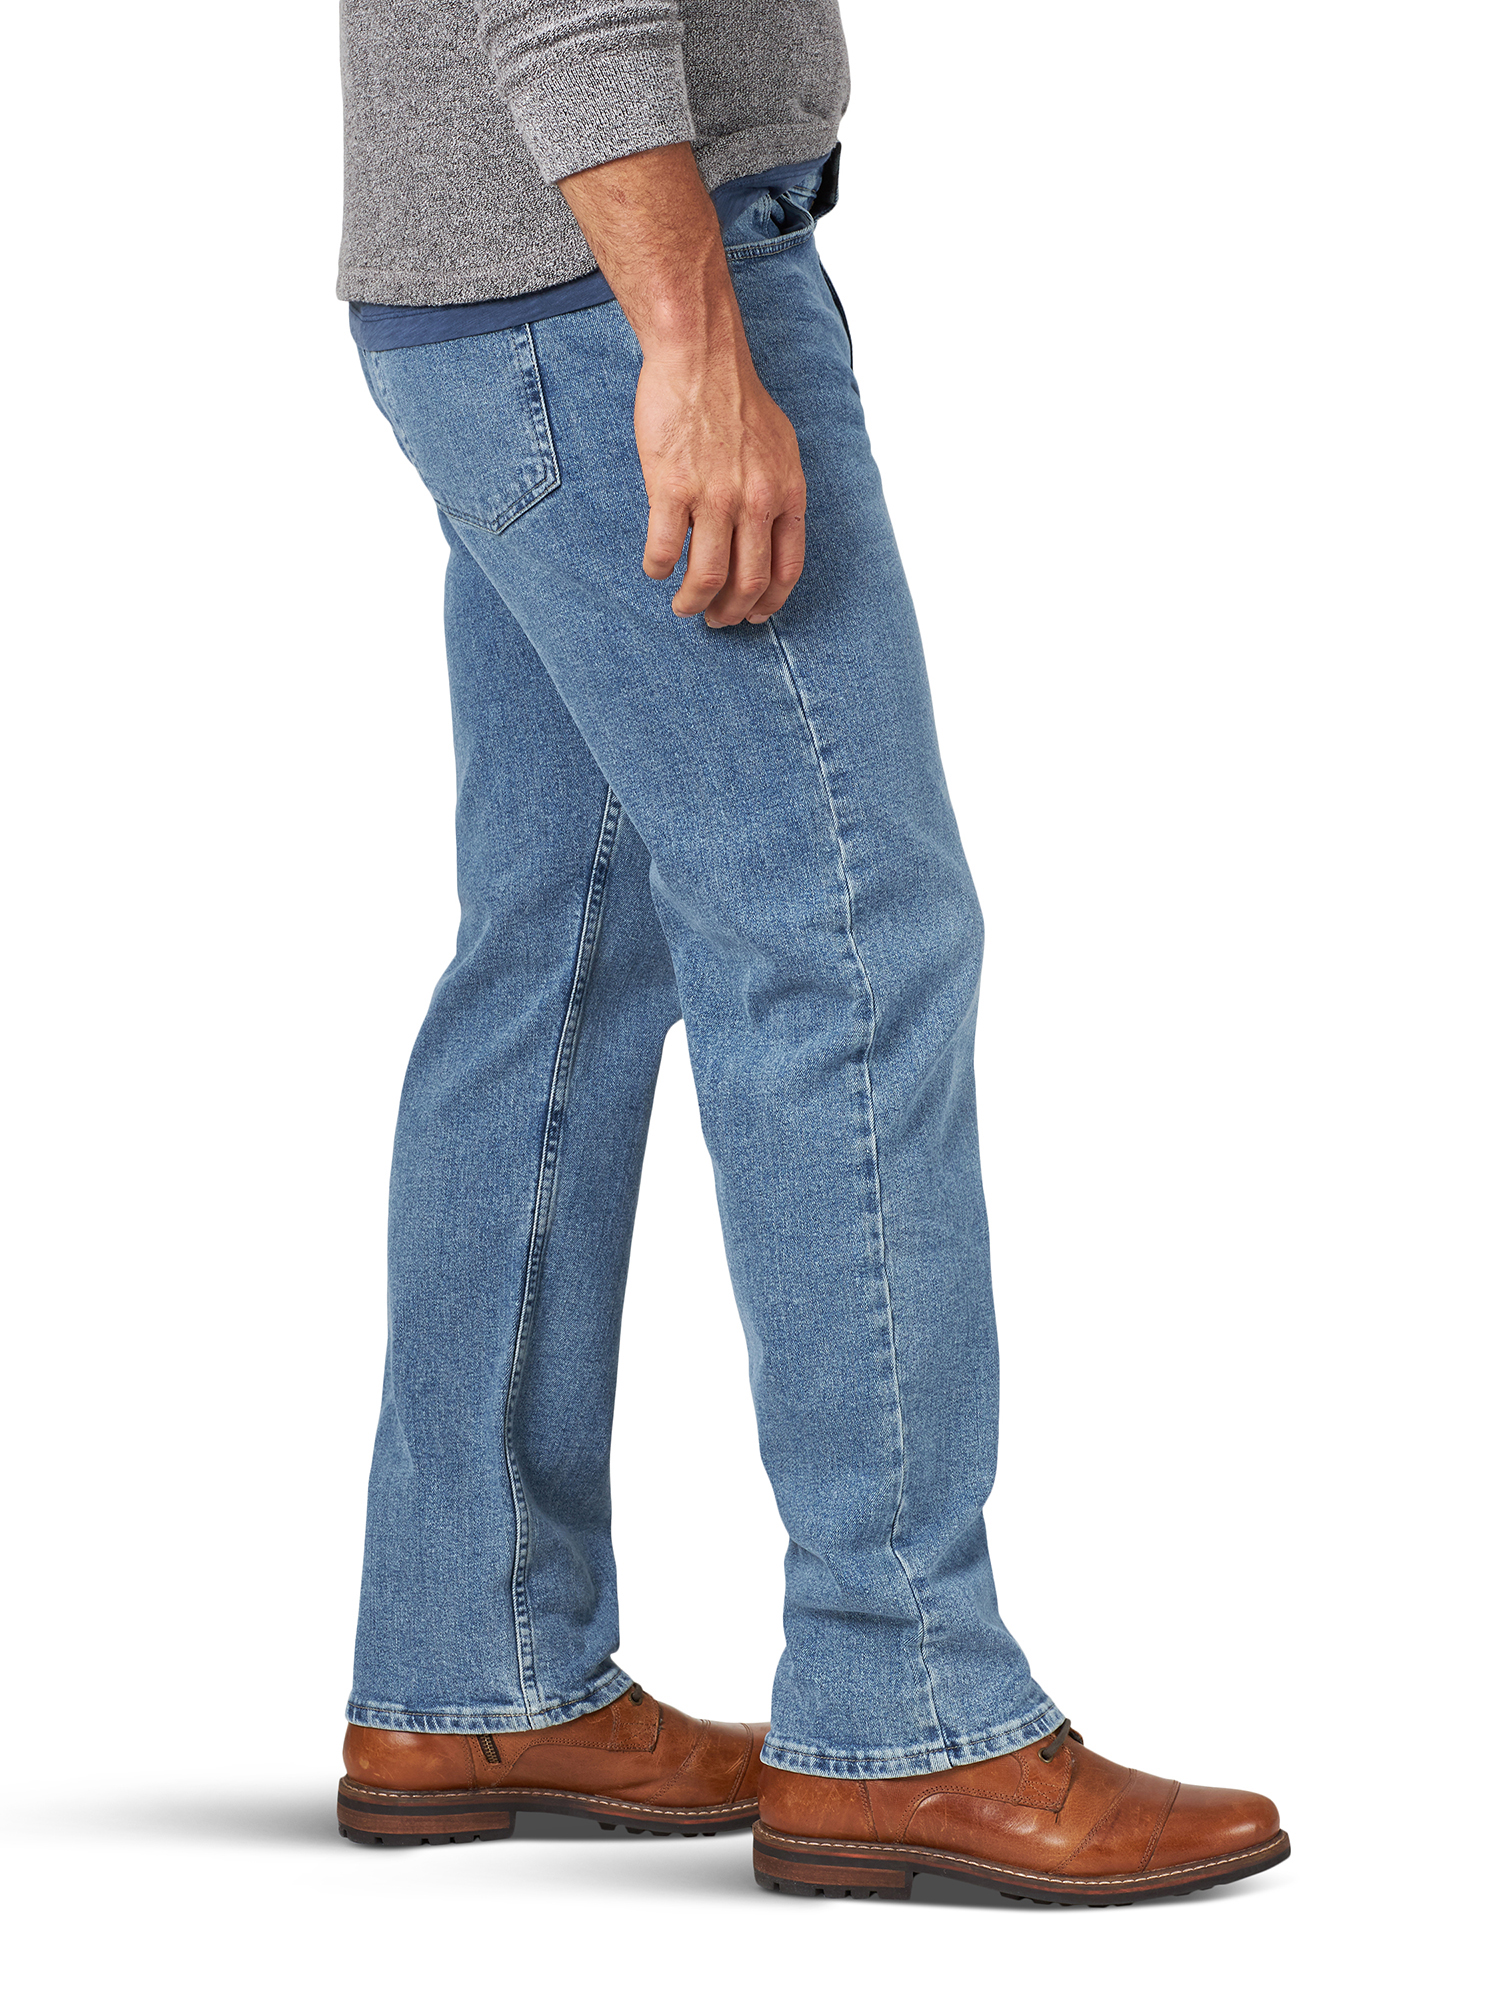 Wrangler Men's Performance Series Relaxed Fit Jeans - Walmart.com